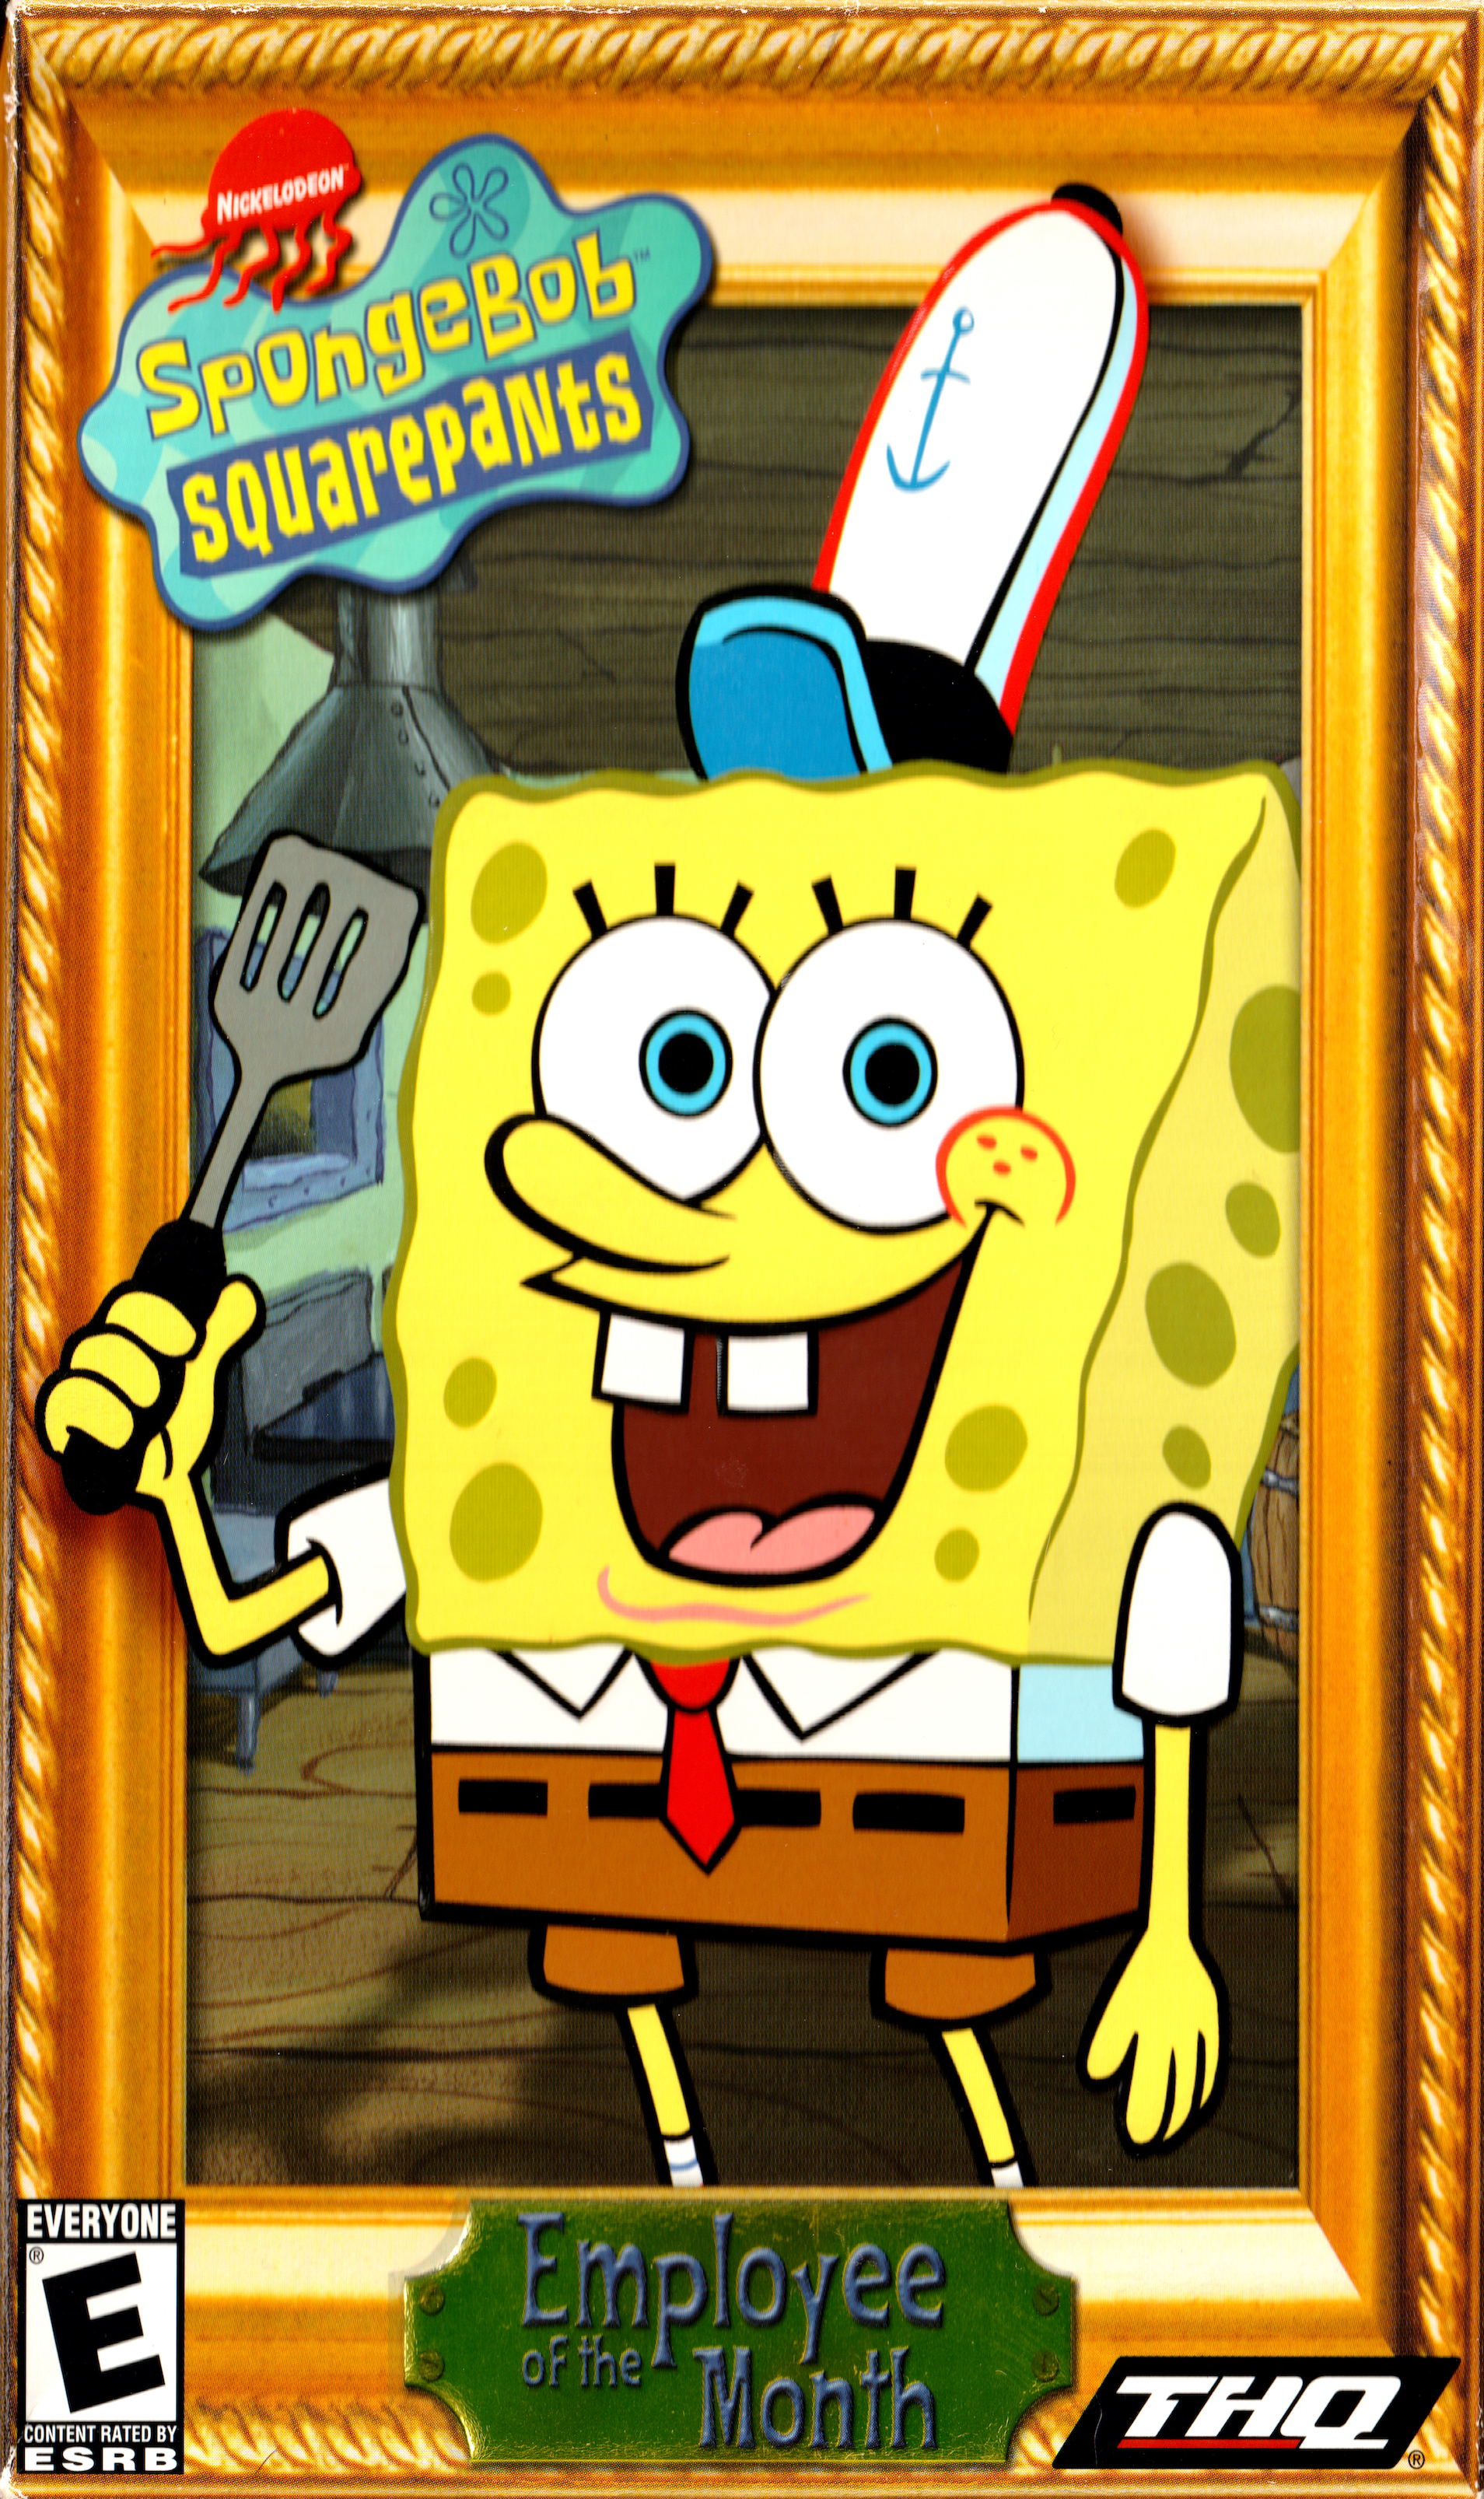 Spongebob Squarepants Games And Videos